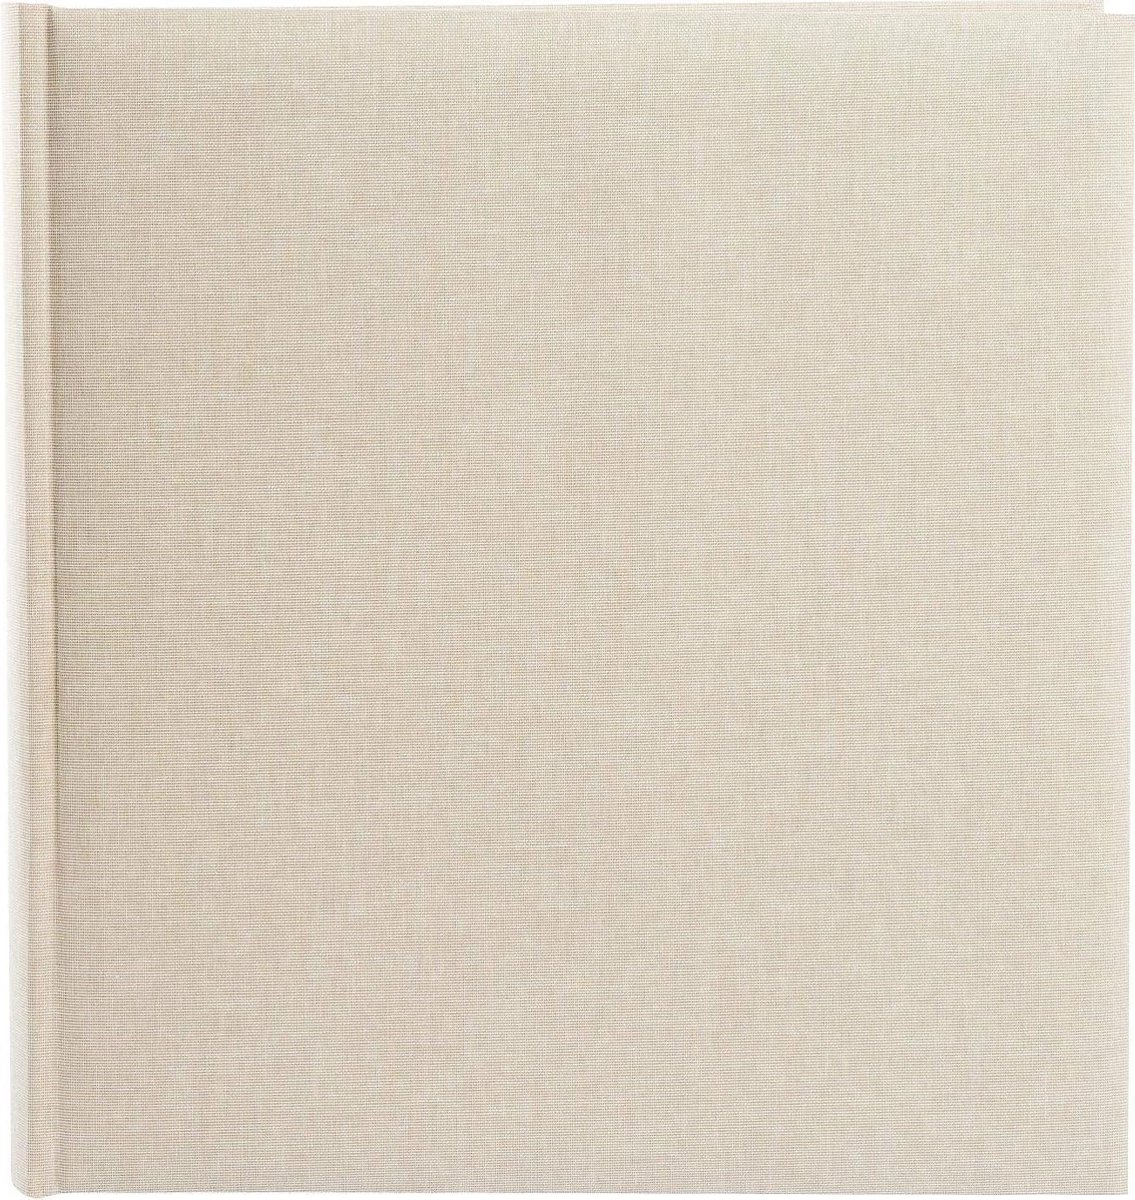 GOLDBUCH GOL-31605 fotoalbum SUMMERTIME Trend 2 beige, 30 x 31 cm, 100 pagina's - Goldbuch